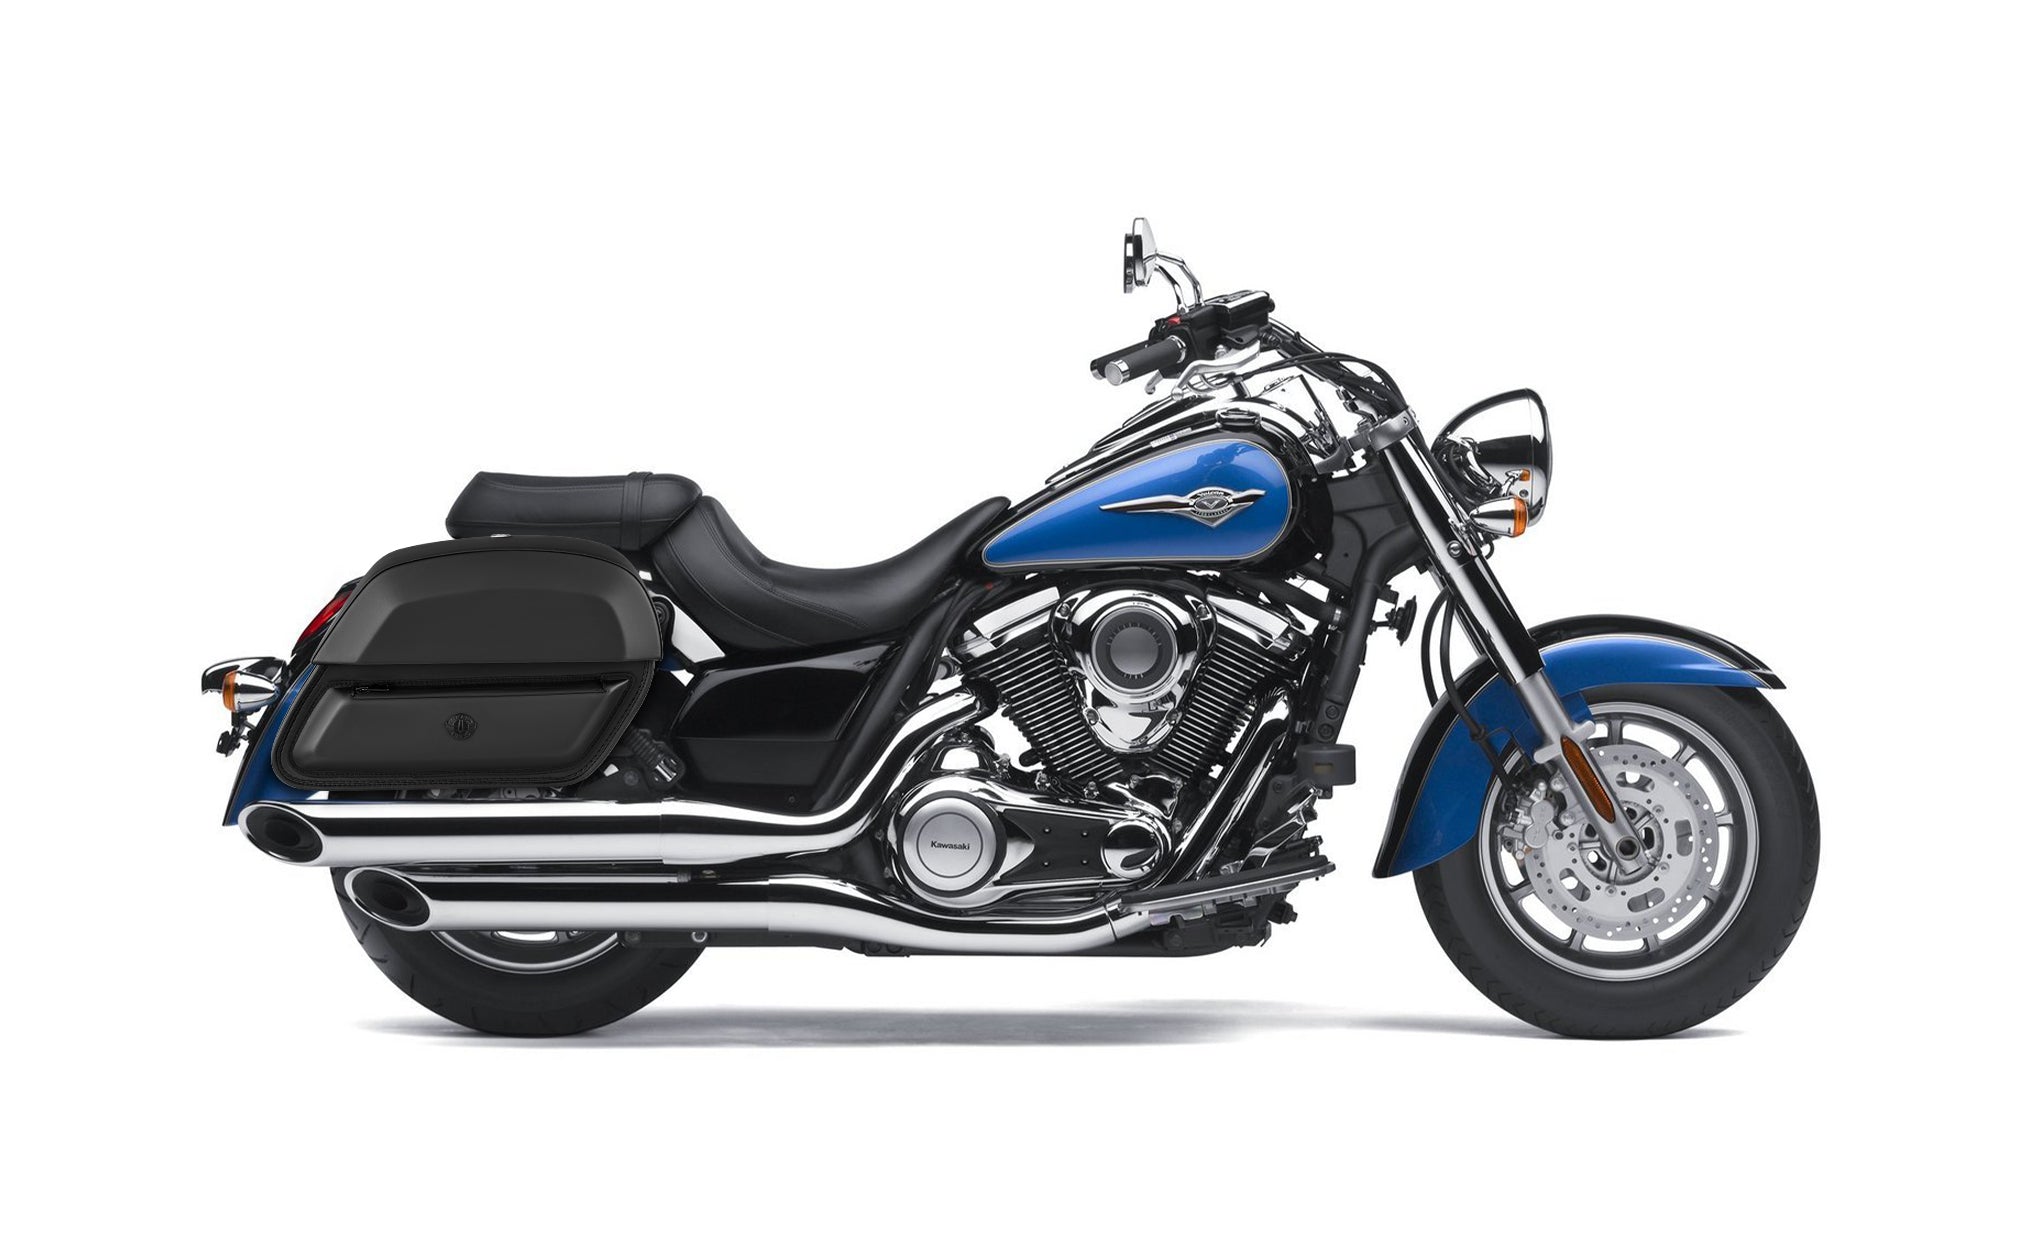 28L - Wraith Medium Kawasaki Vulcan 1700 Classic VN1700 Leather Motorcycle Saddlebags BAG on Bike View @expand